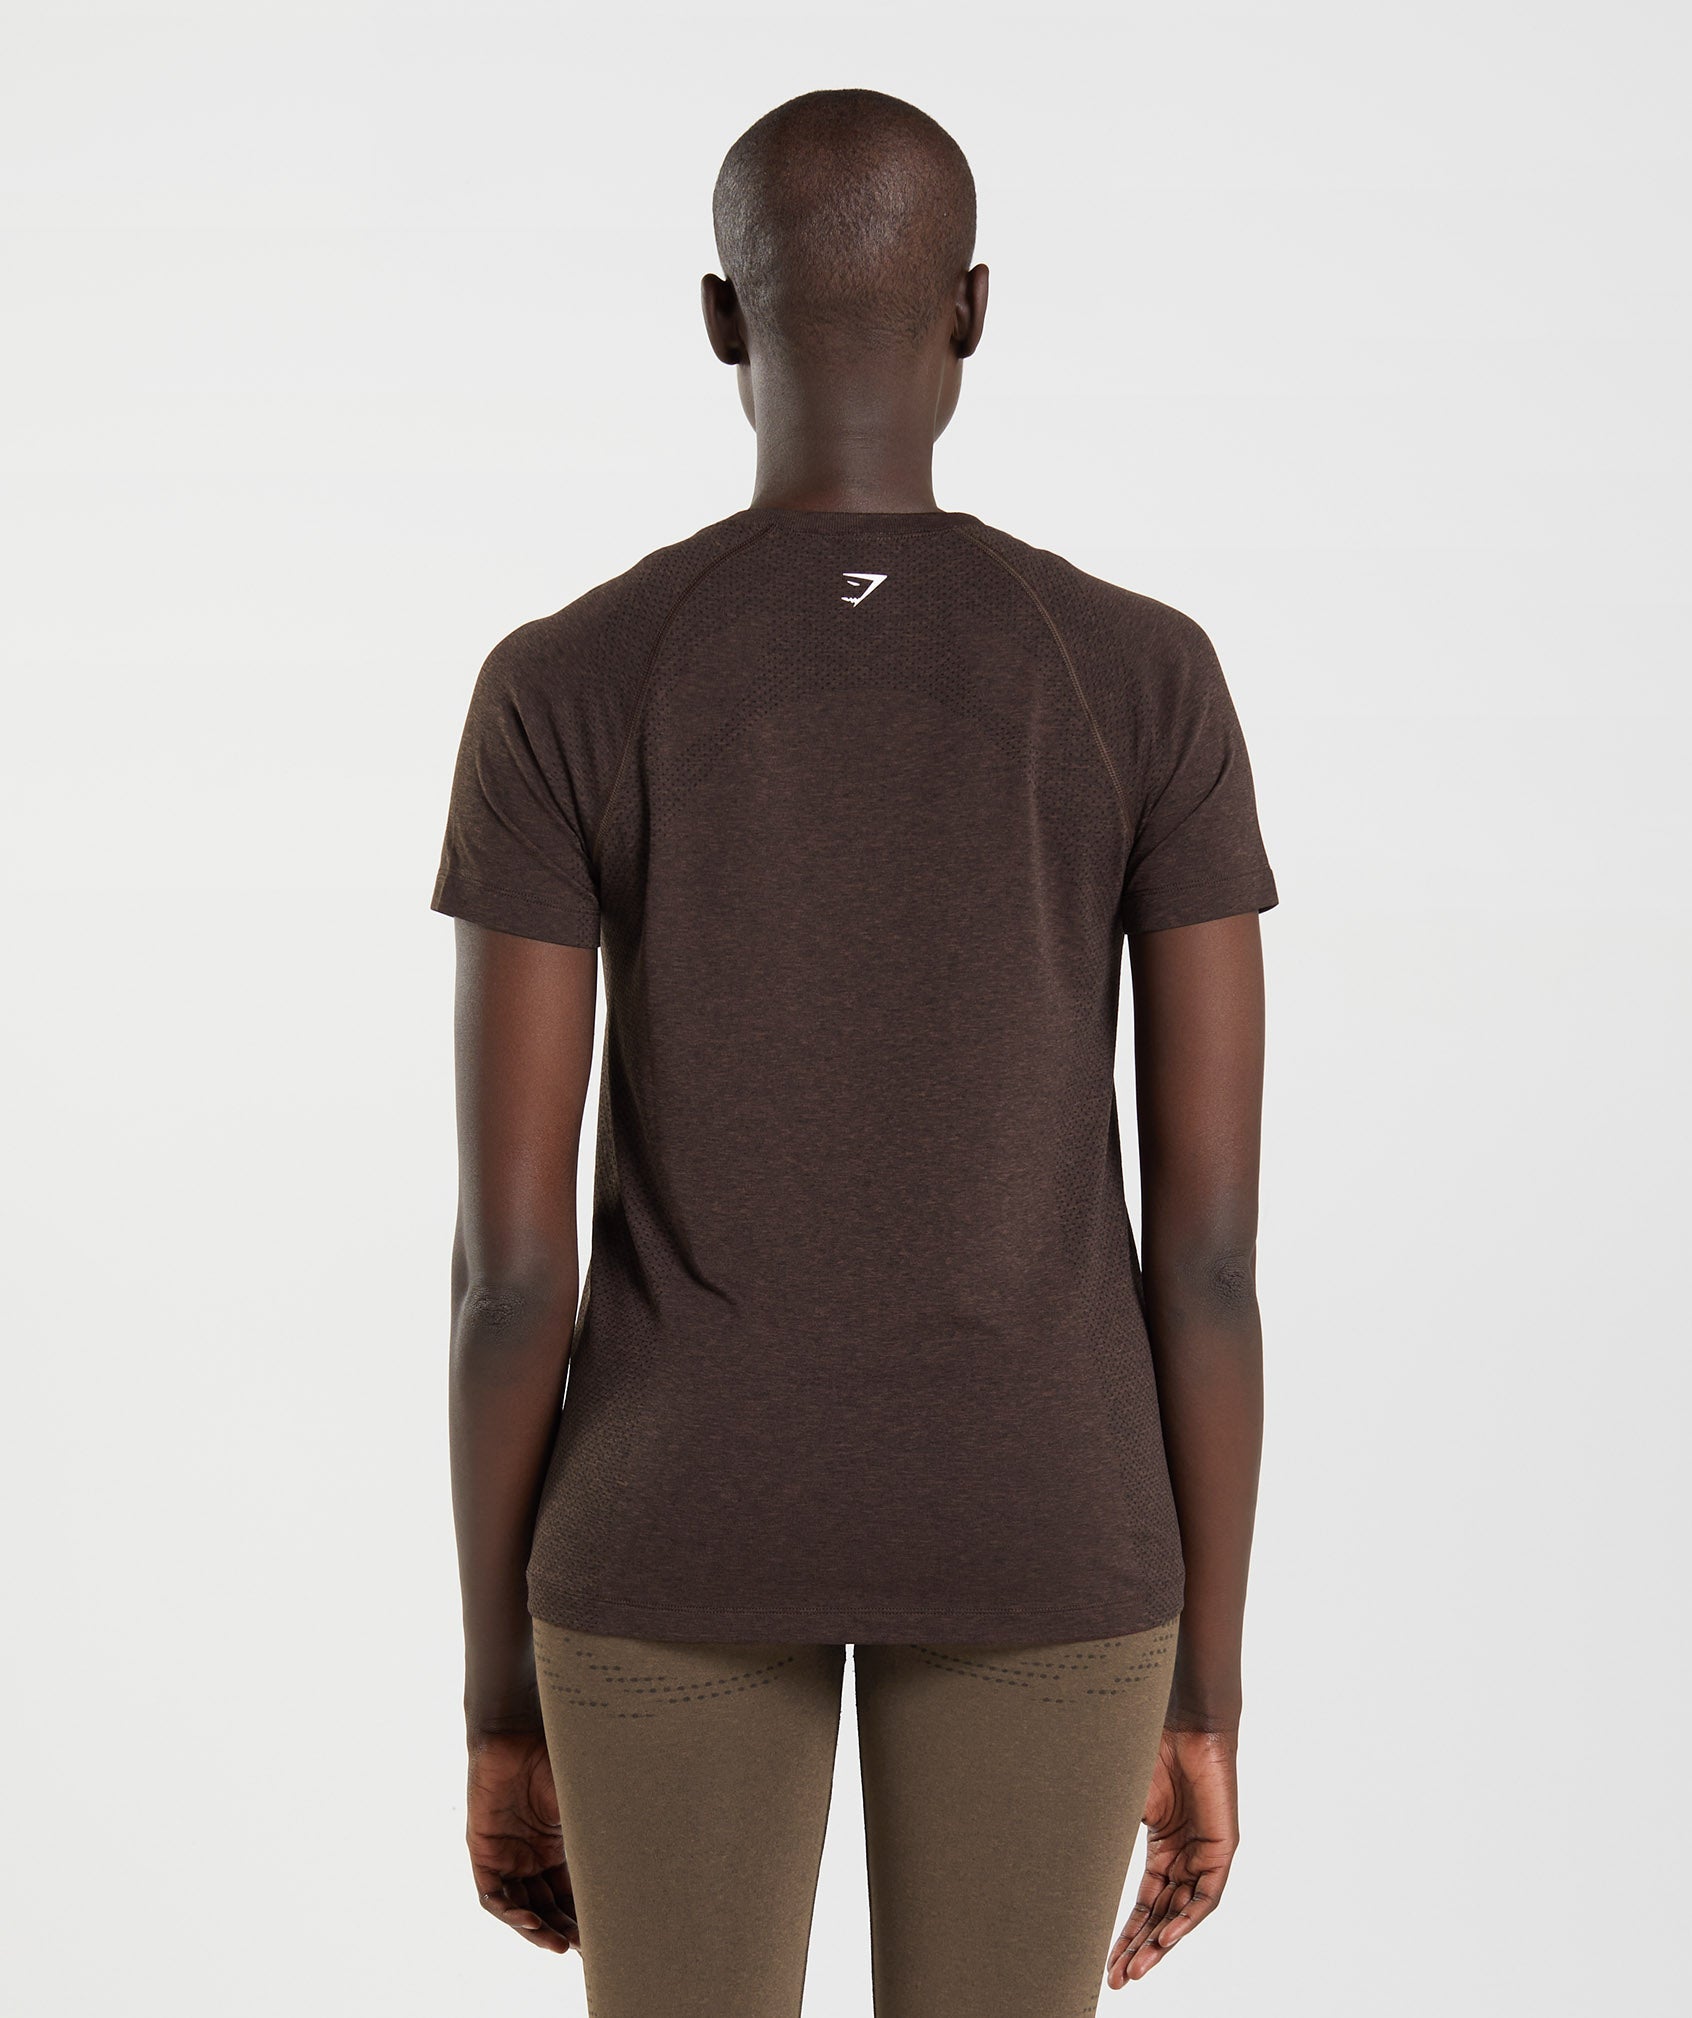 Vital Seamless 2.0 Light T-Shirt in Cherry Brown Marl - view 4